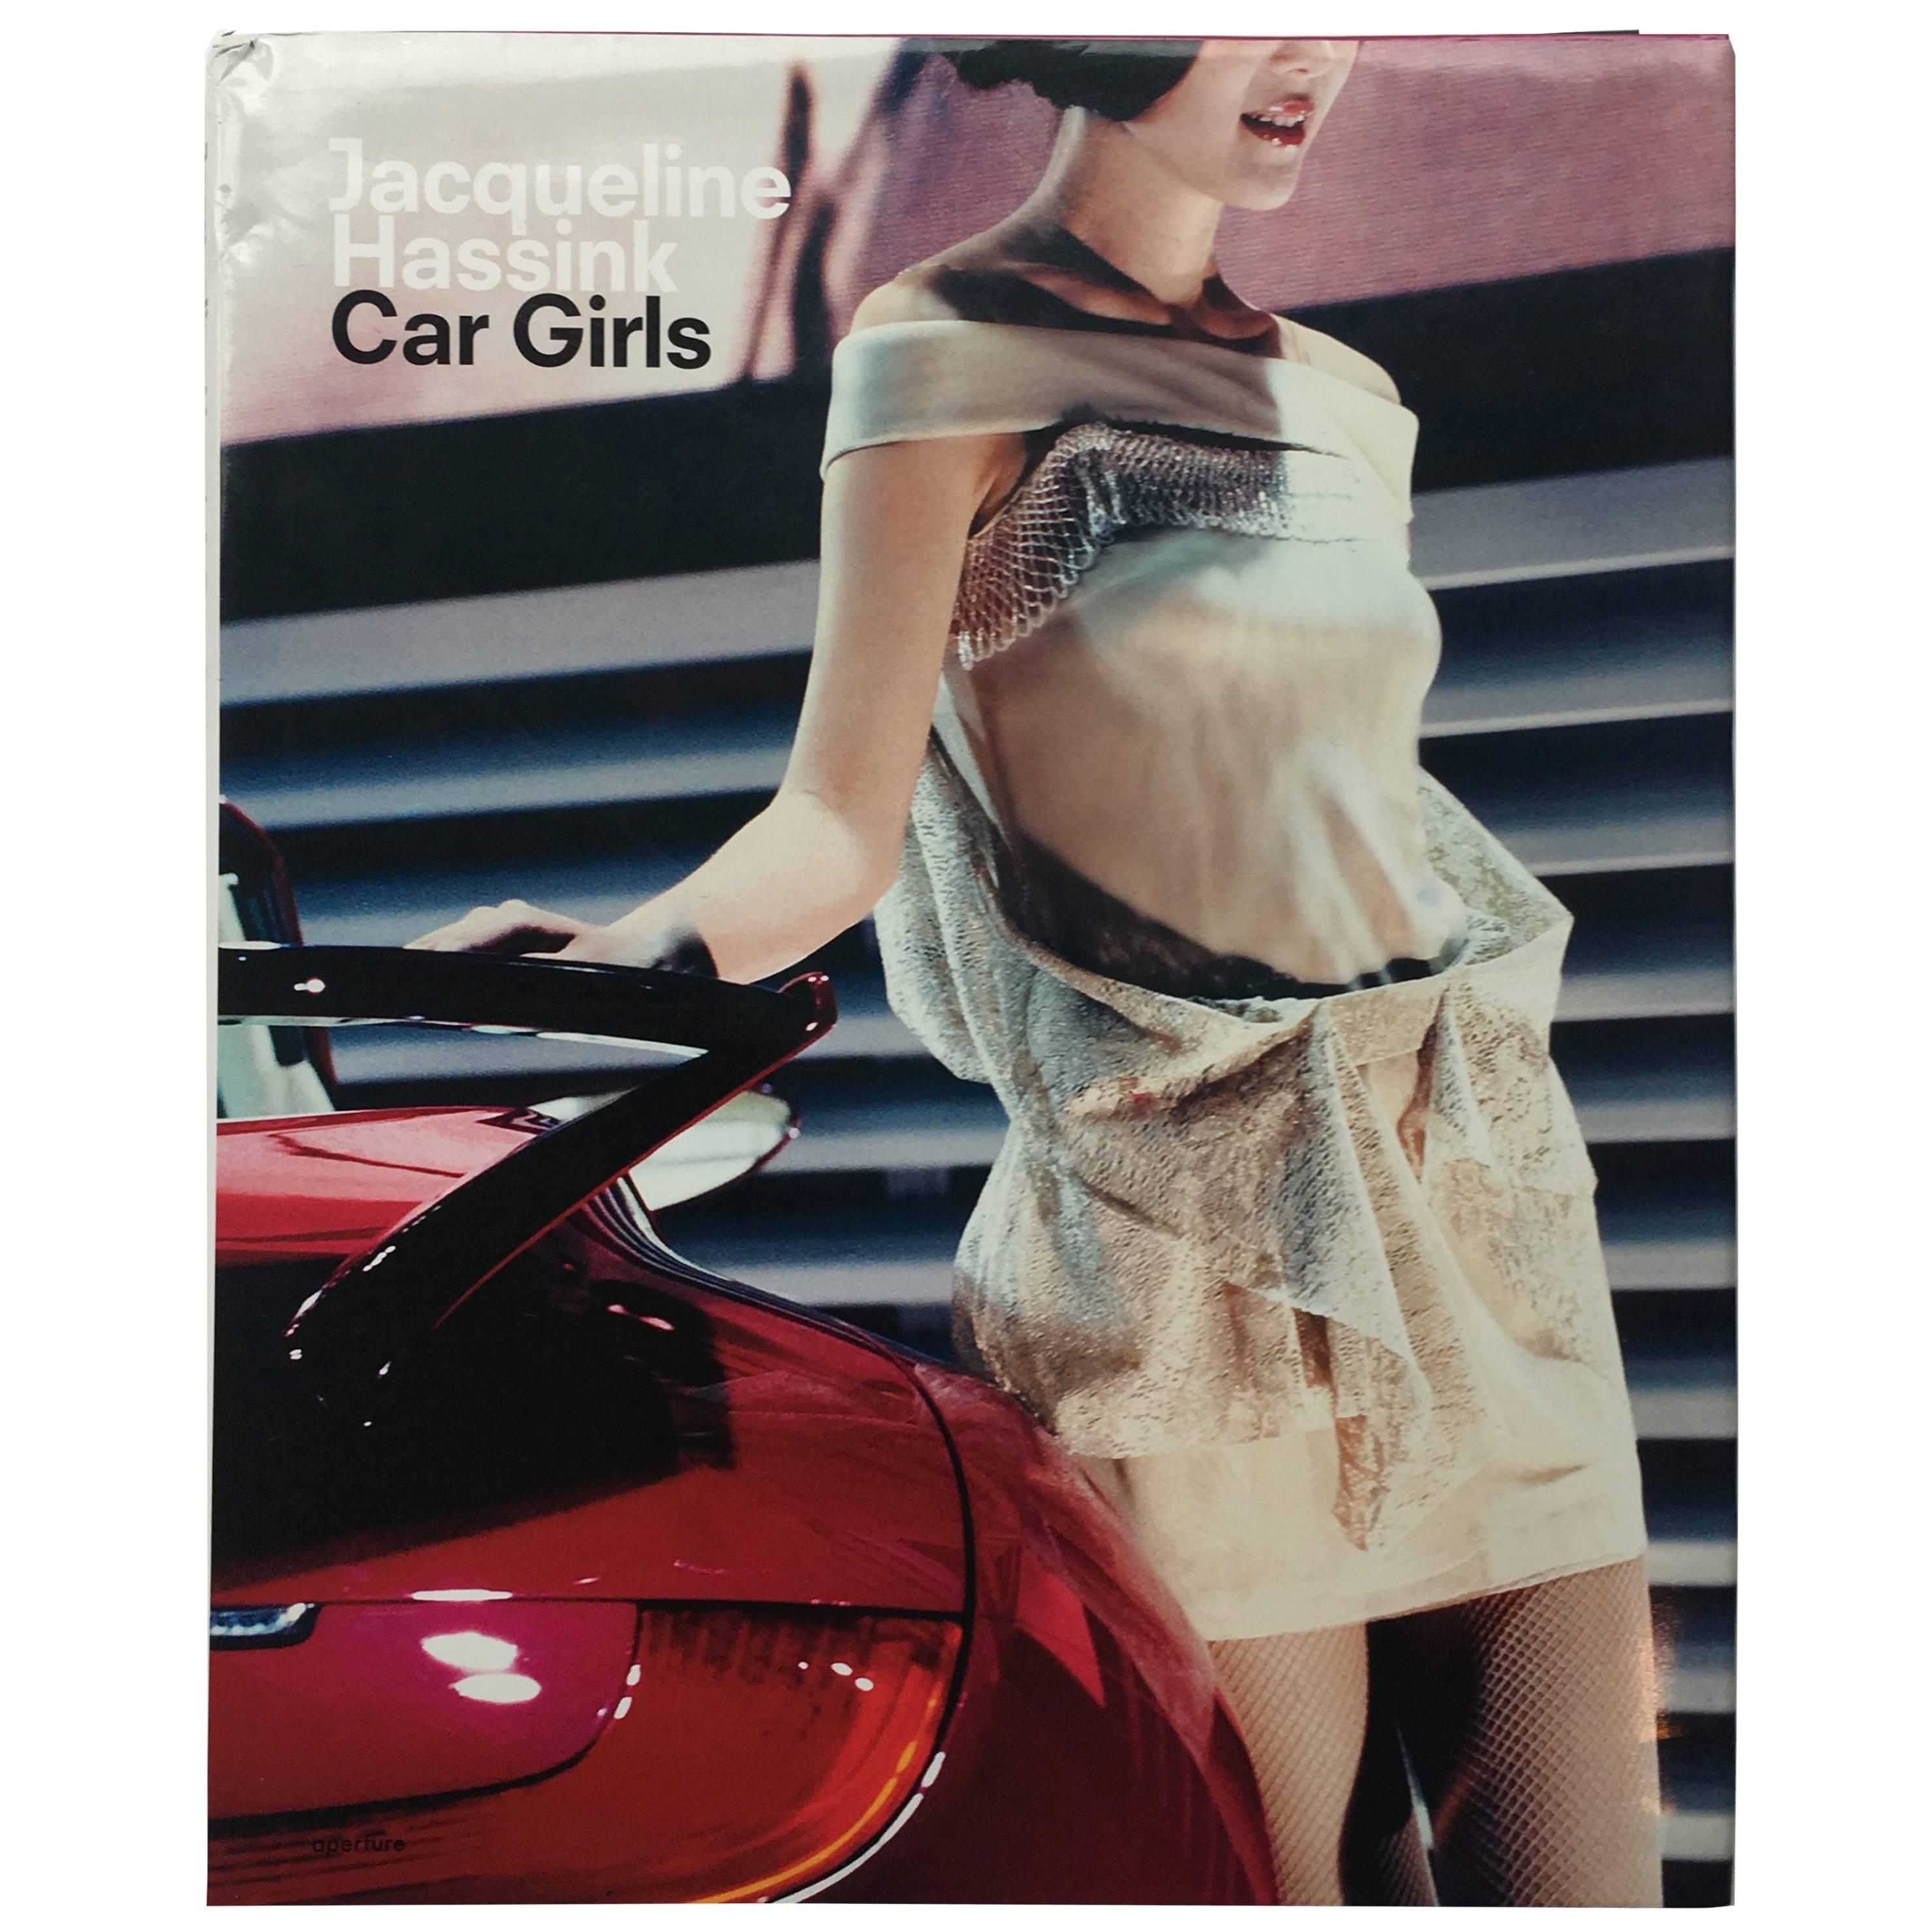 Car Girls - Jacqueline Hassink - 1st Edition, Aperture, 2009 For Sale